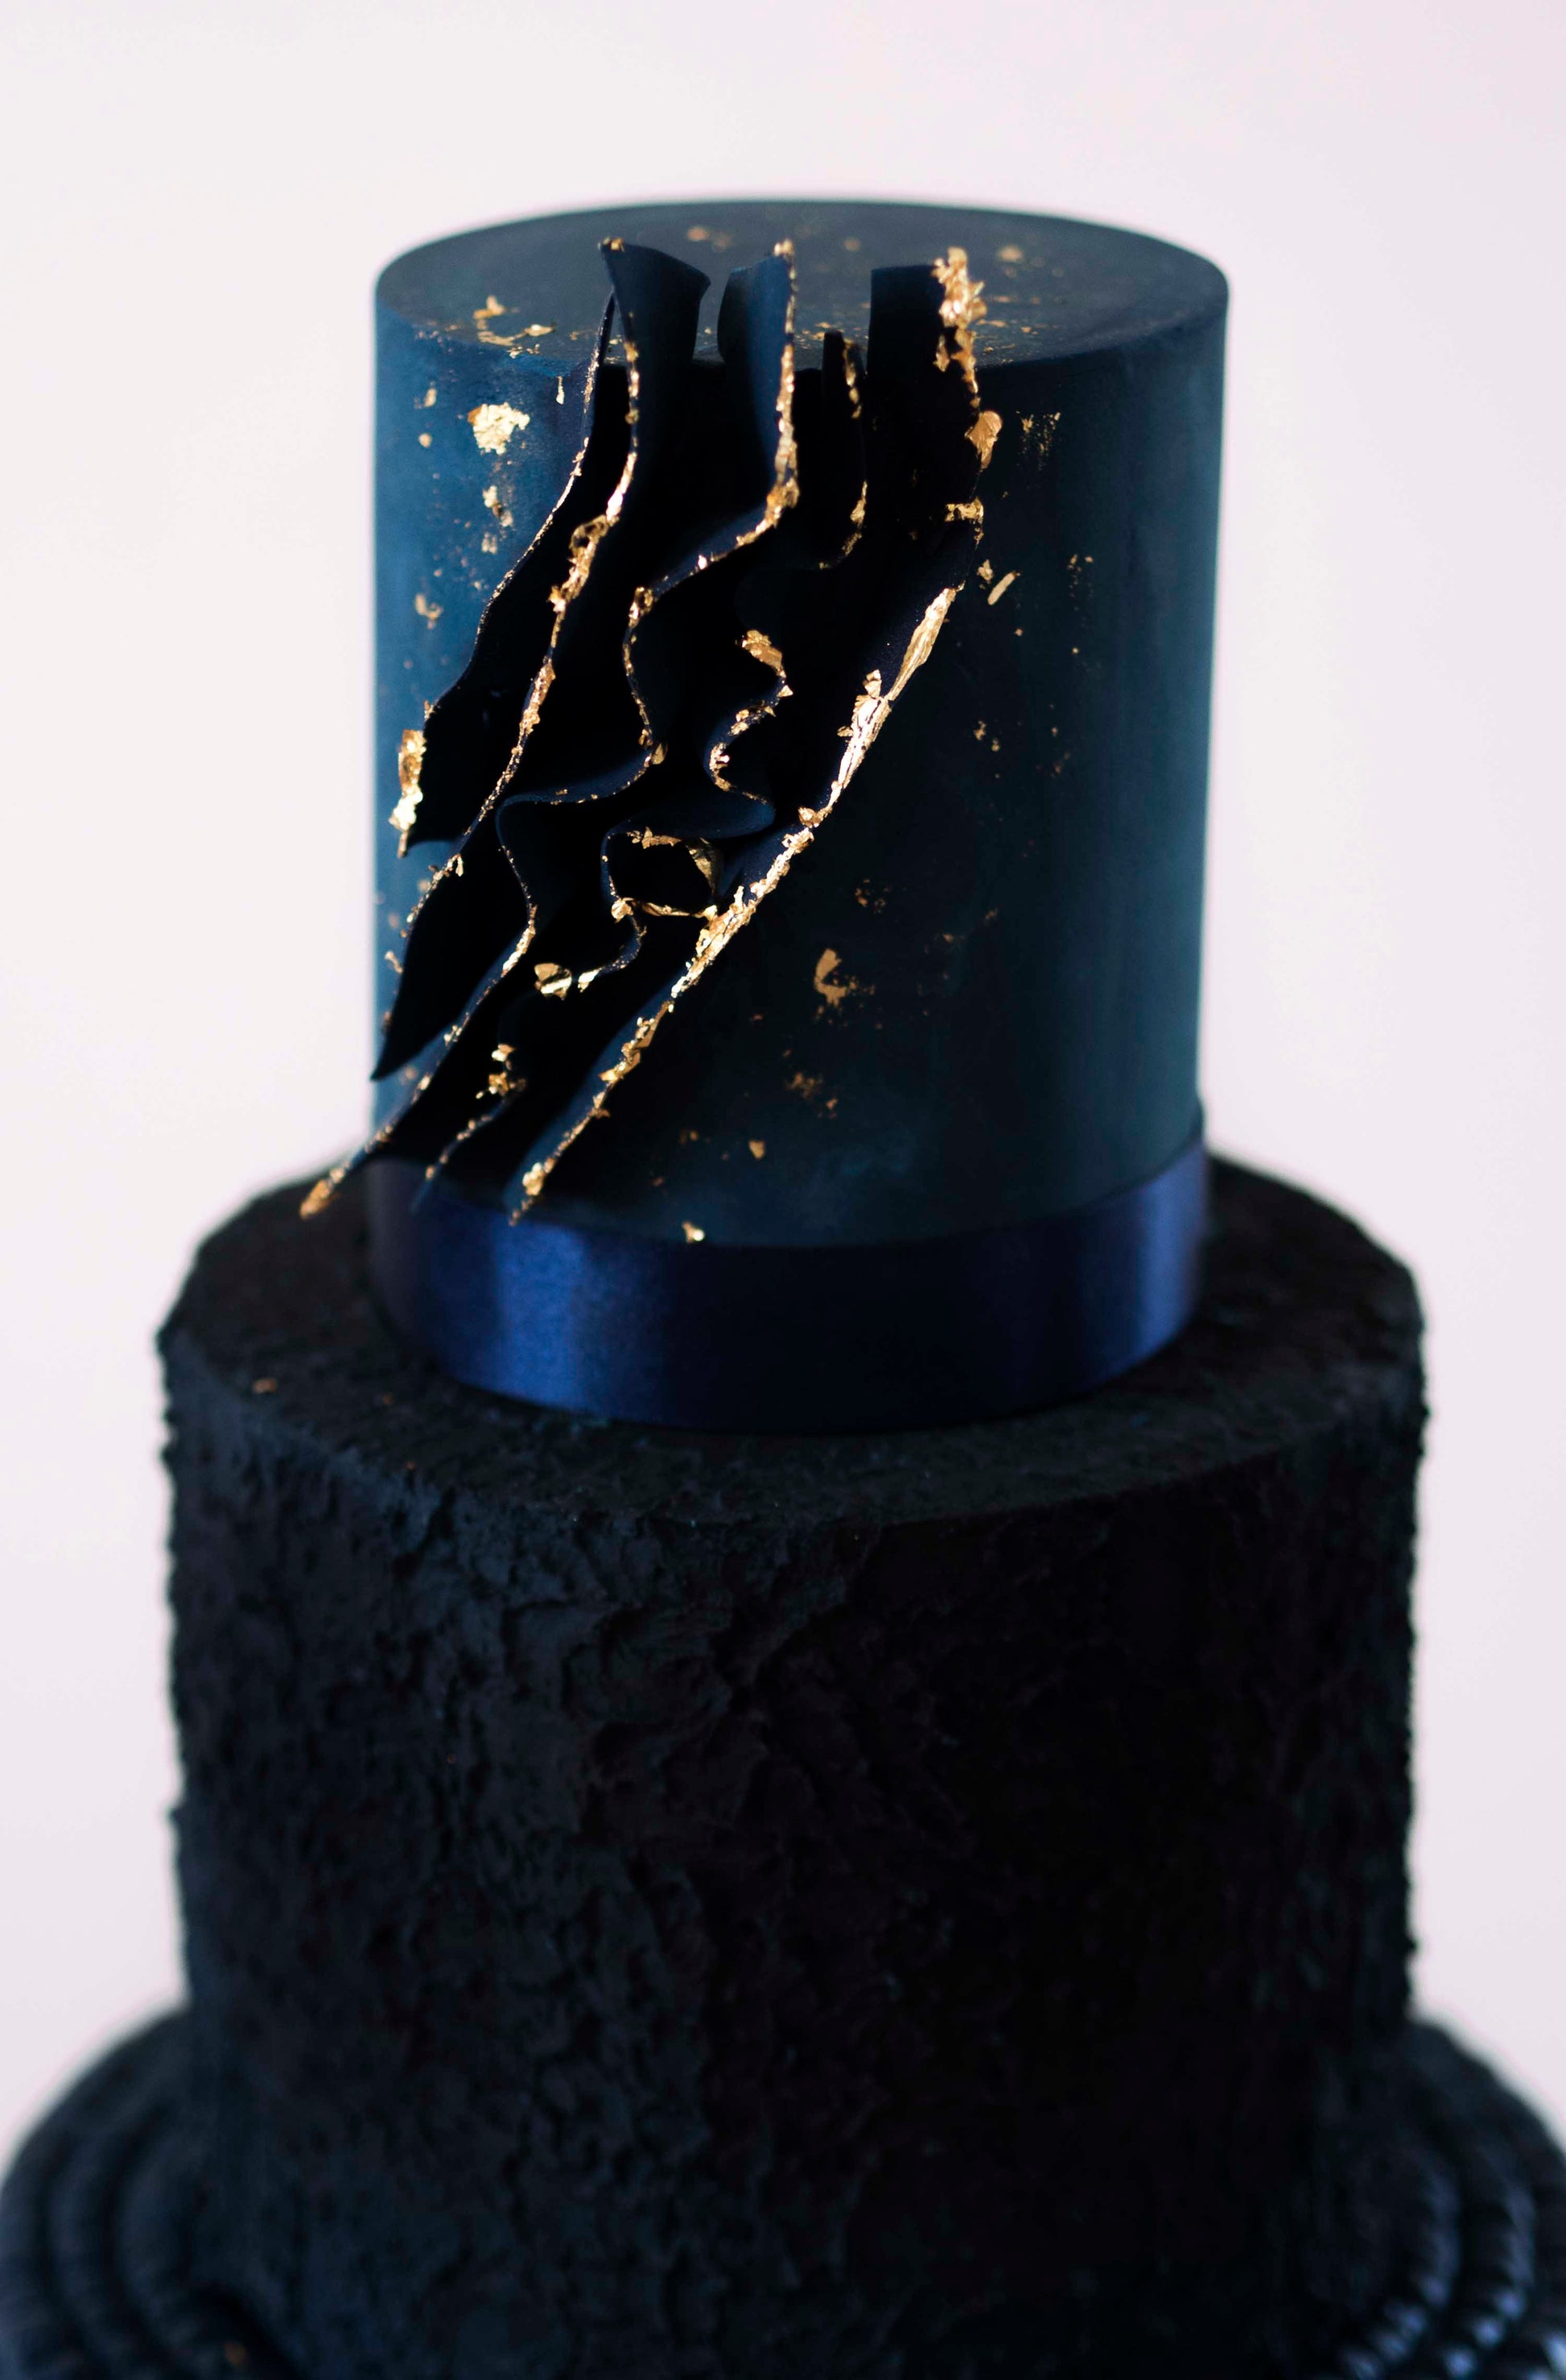 Edible blue sugar voile edged in royal gold leaf embellishes a three tier modern wedding cake in deep blue